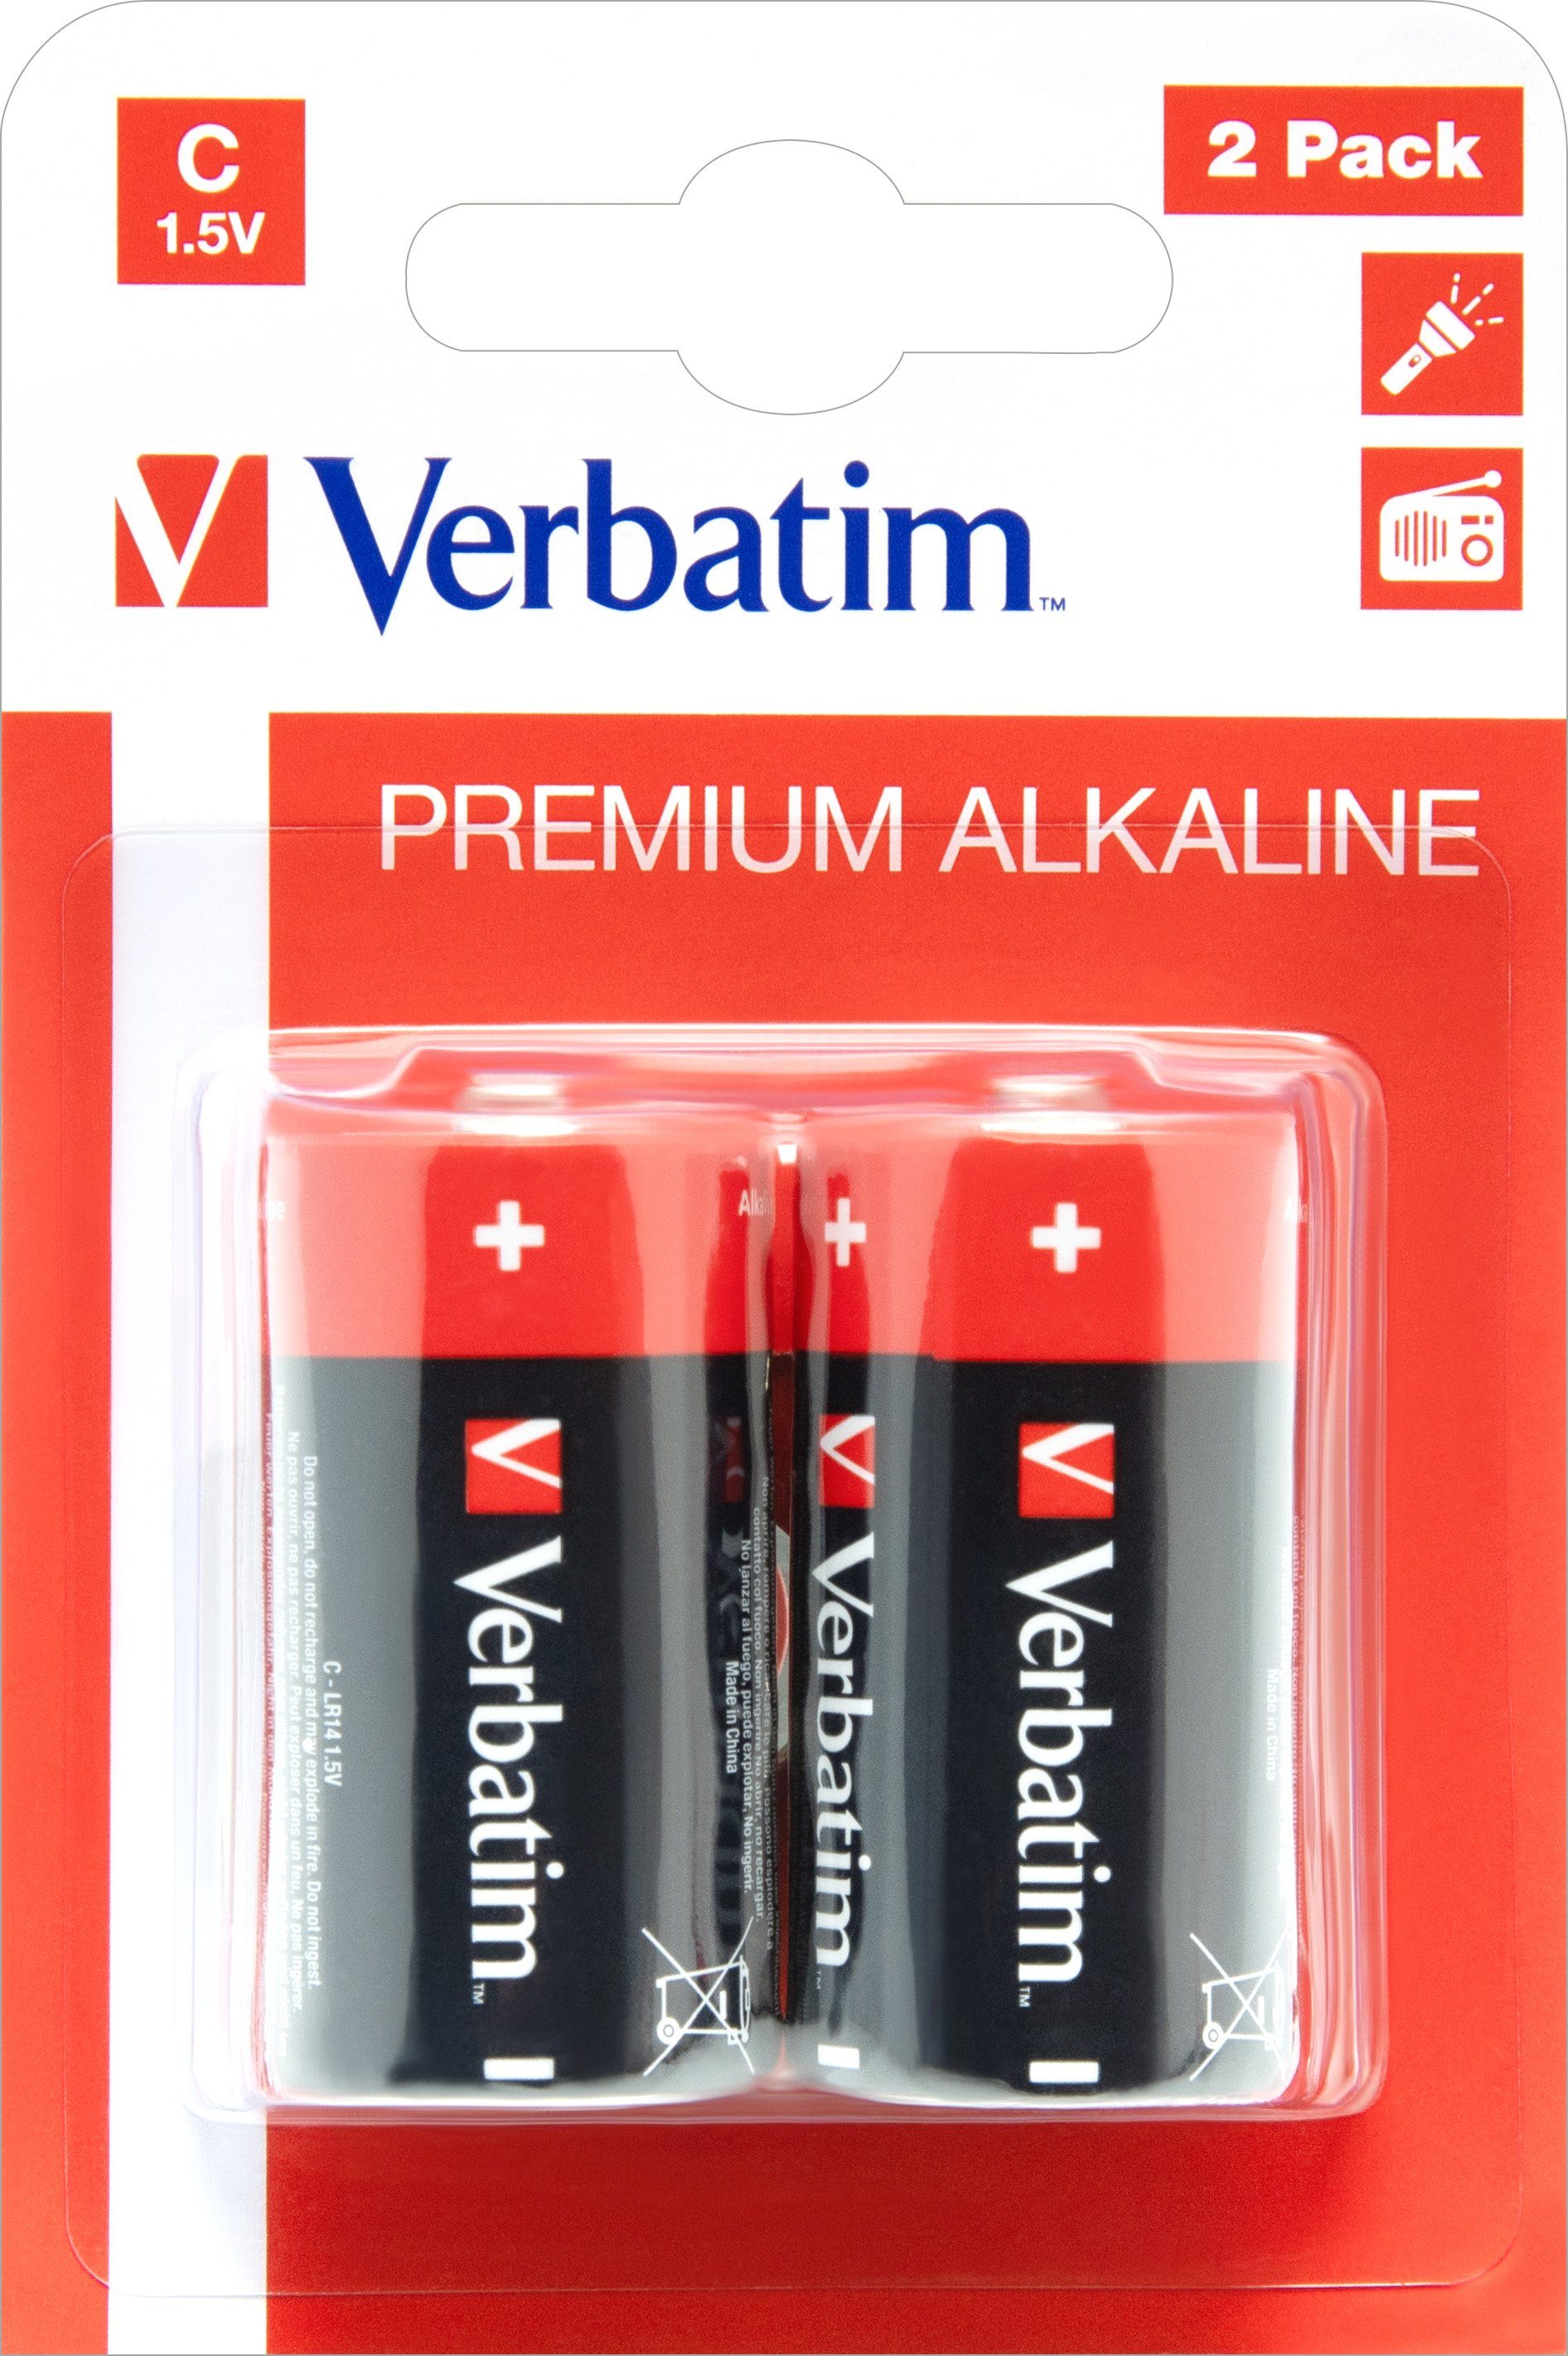 Verbatim Verbatim Batterie Alkaline, Baby, LR14, Premium, C, Batterie 1.5V Retail Blist